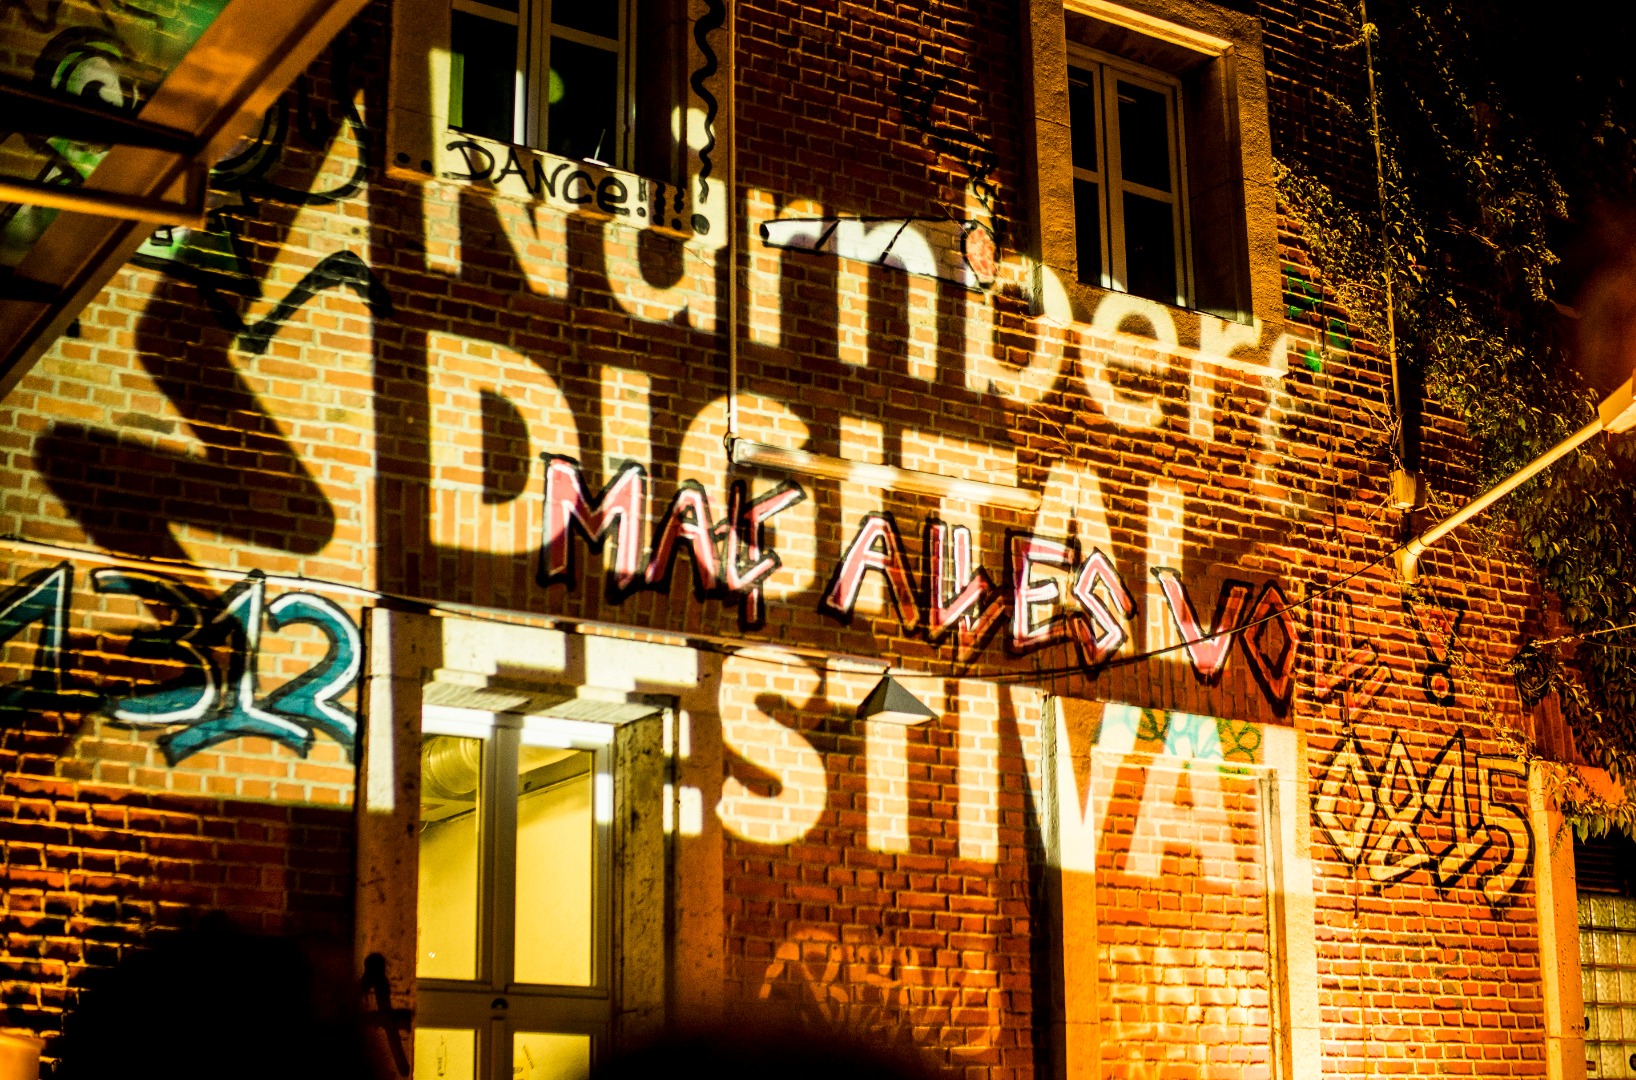  Nürnberg Digital Festival. Foto: Jolanta Dworczyk